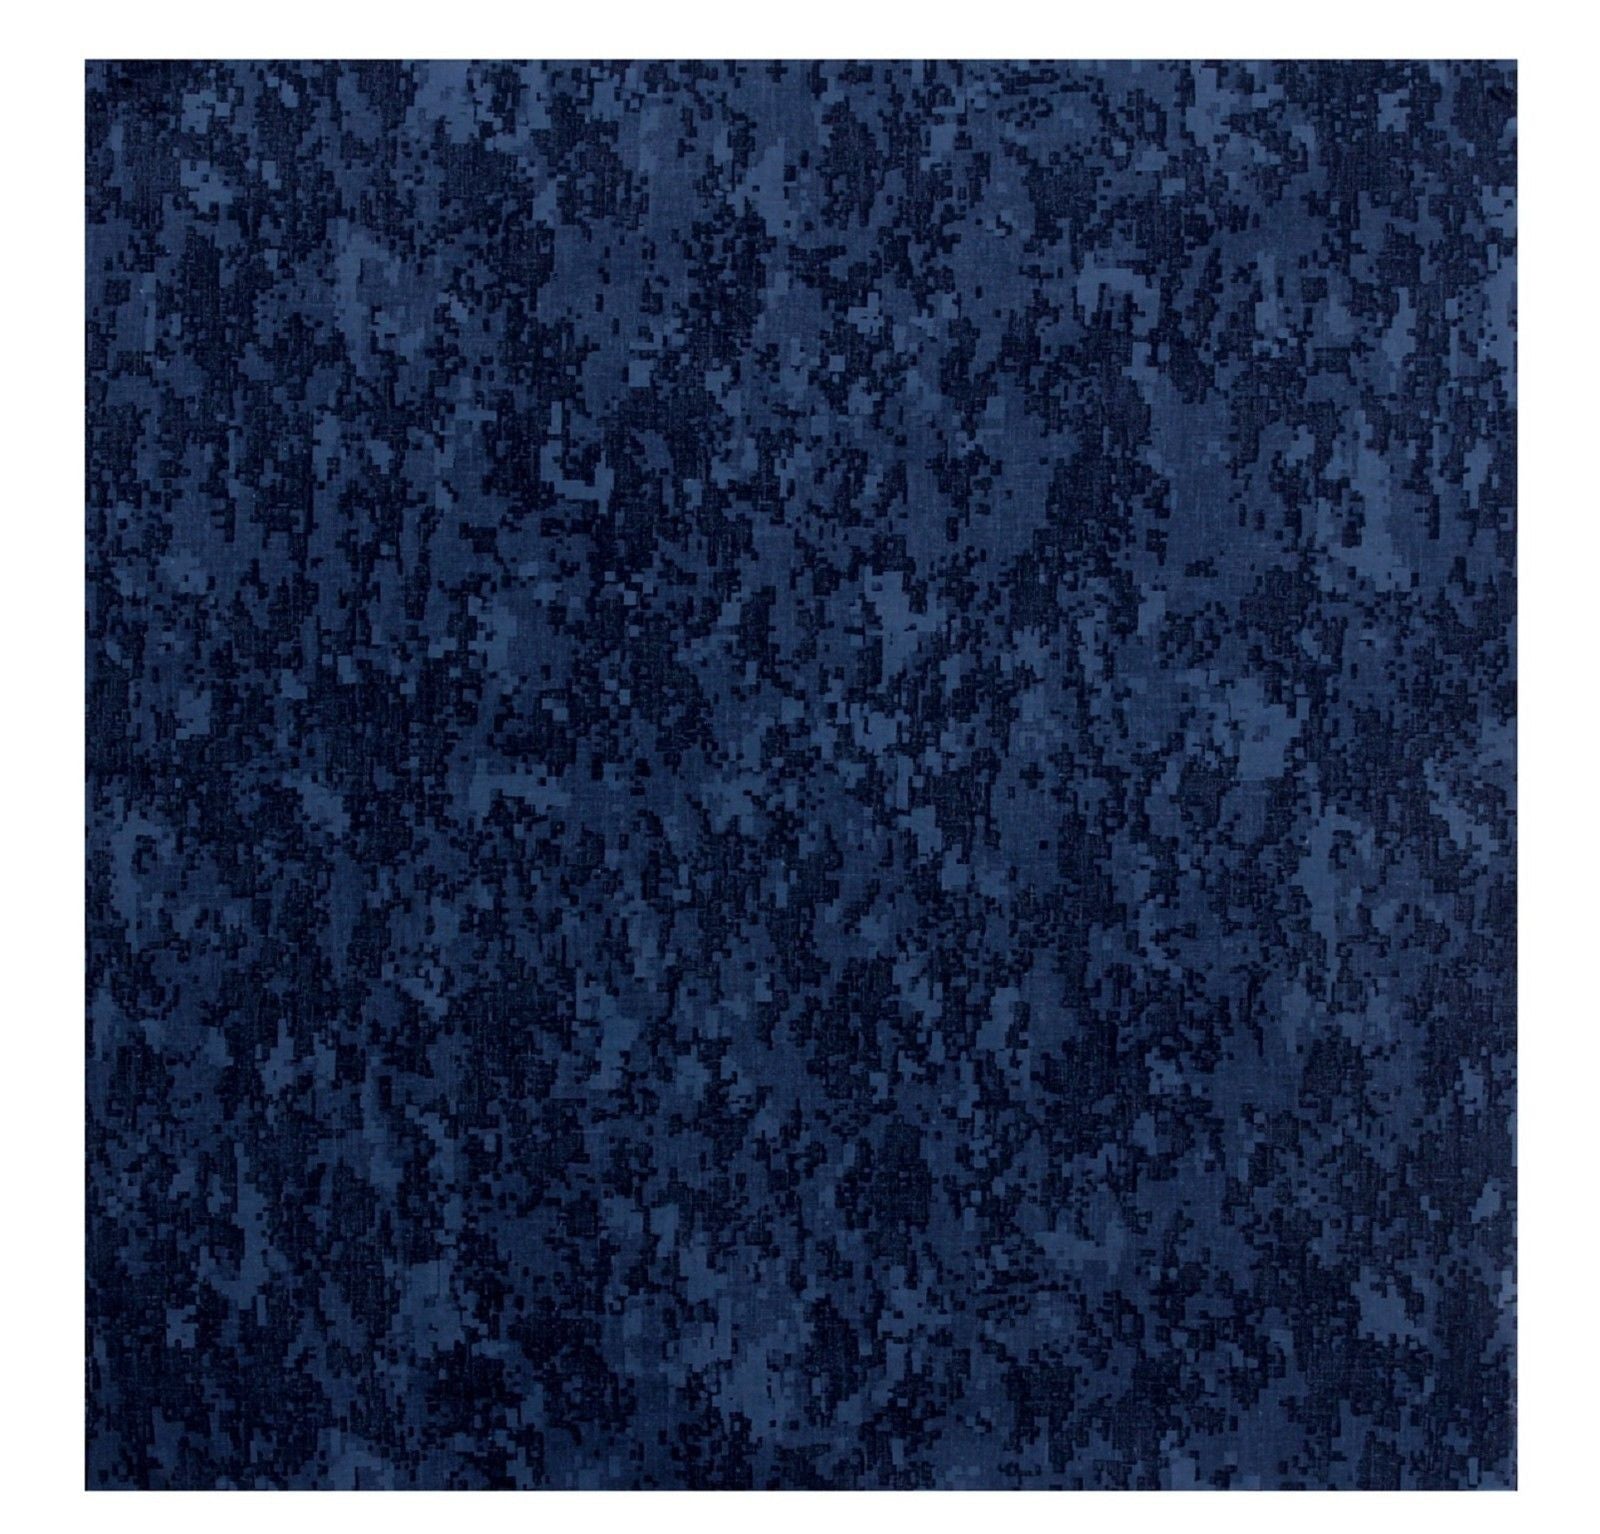 blue digital camo pattern